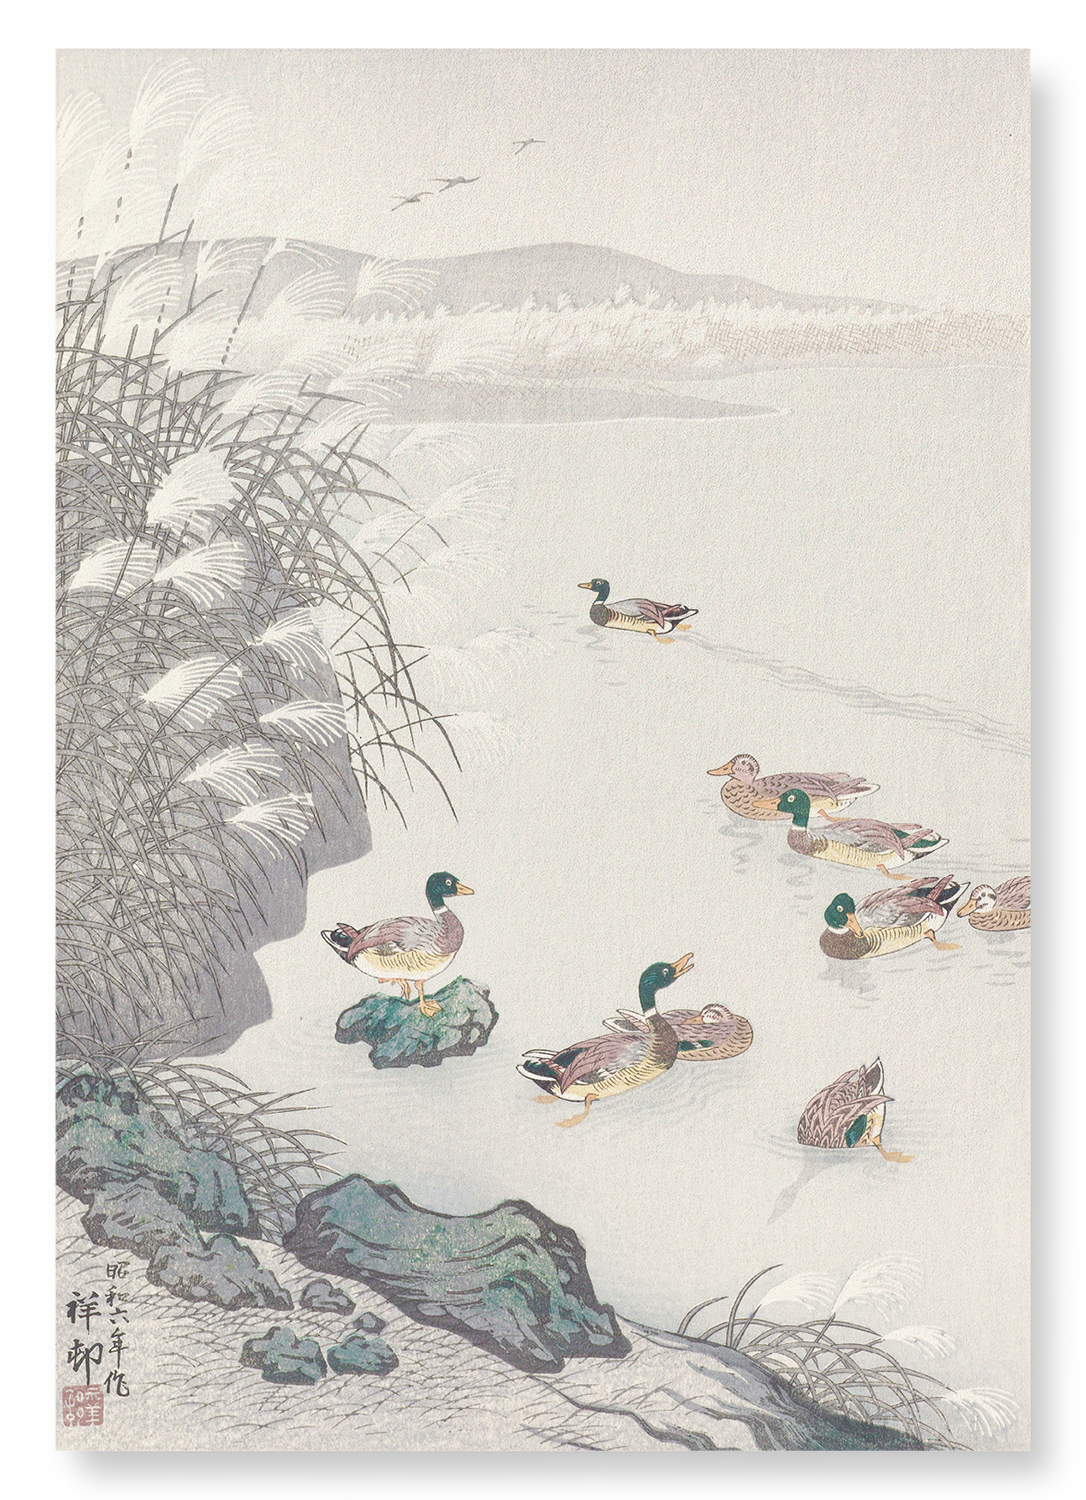 DUCKS IN THE WATER (1931): Japanese Art Print